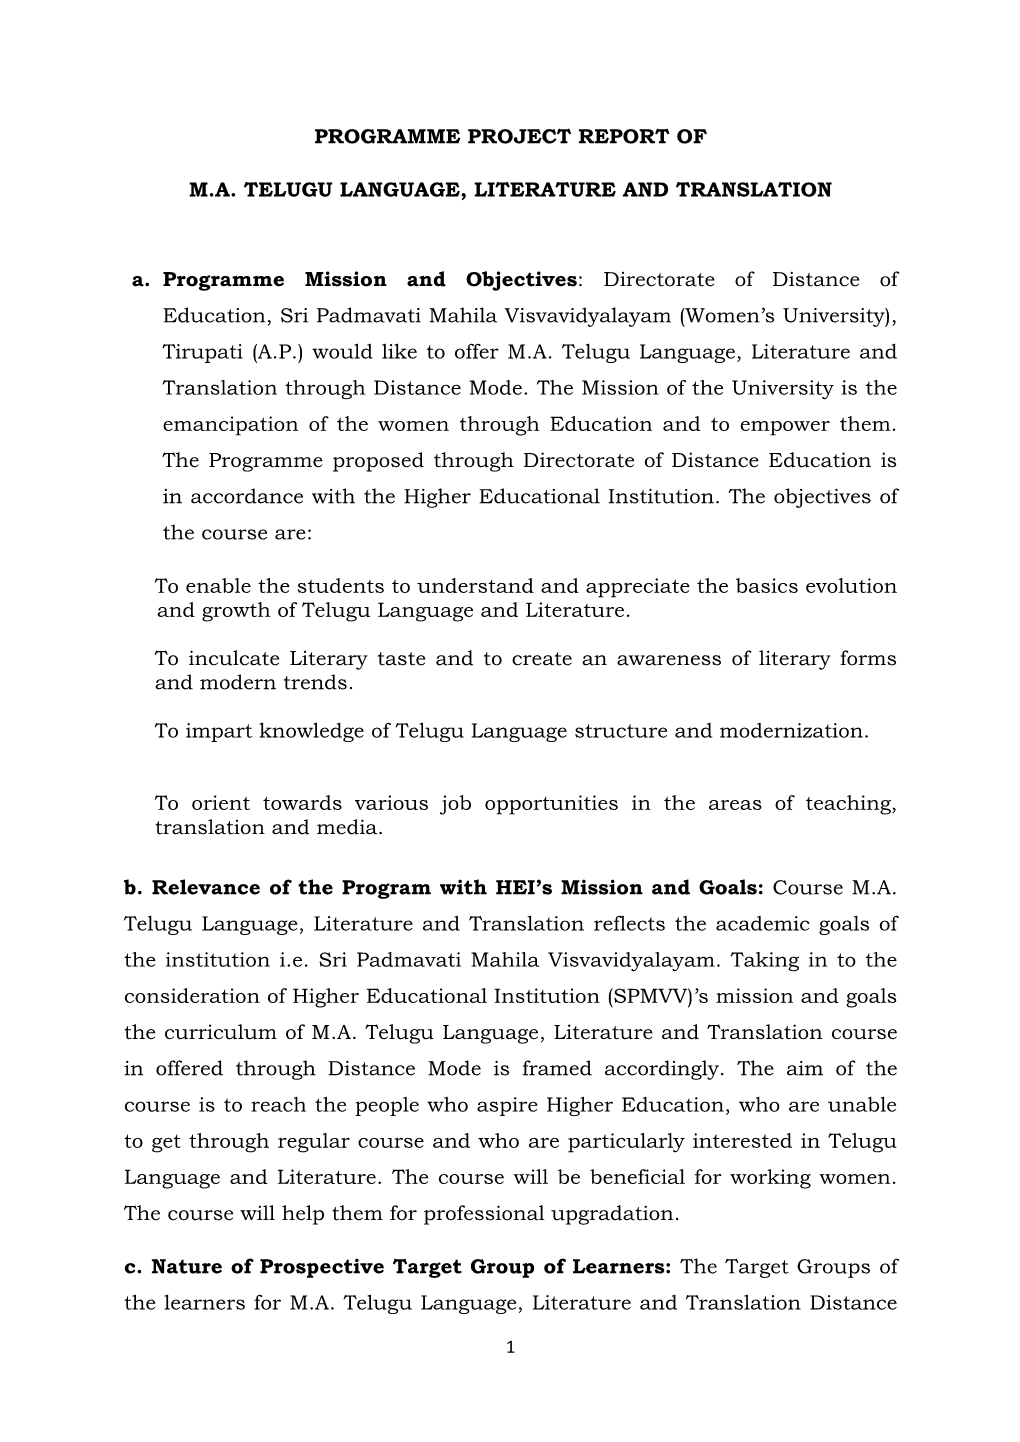 M.A Telugu Language,Literature & Translation PPR for 2020-21